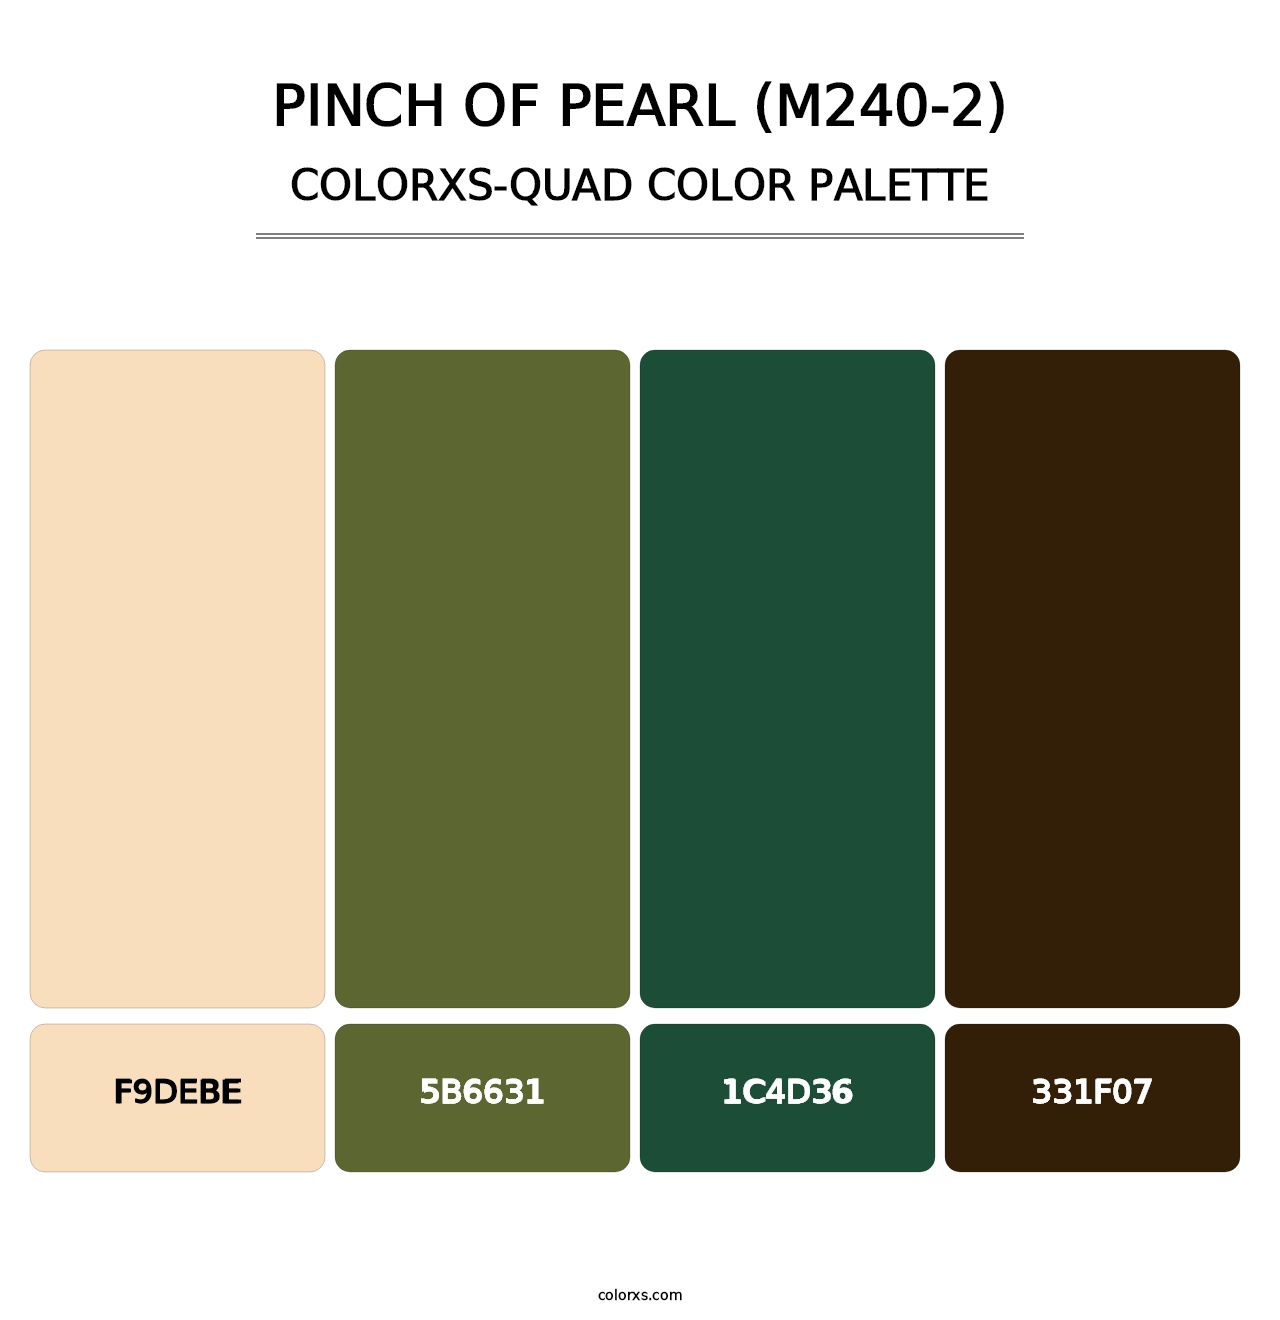 Pinch Of Pearl (M240-2) - Colorxs Quad Palette